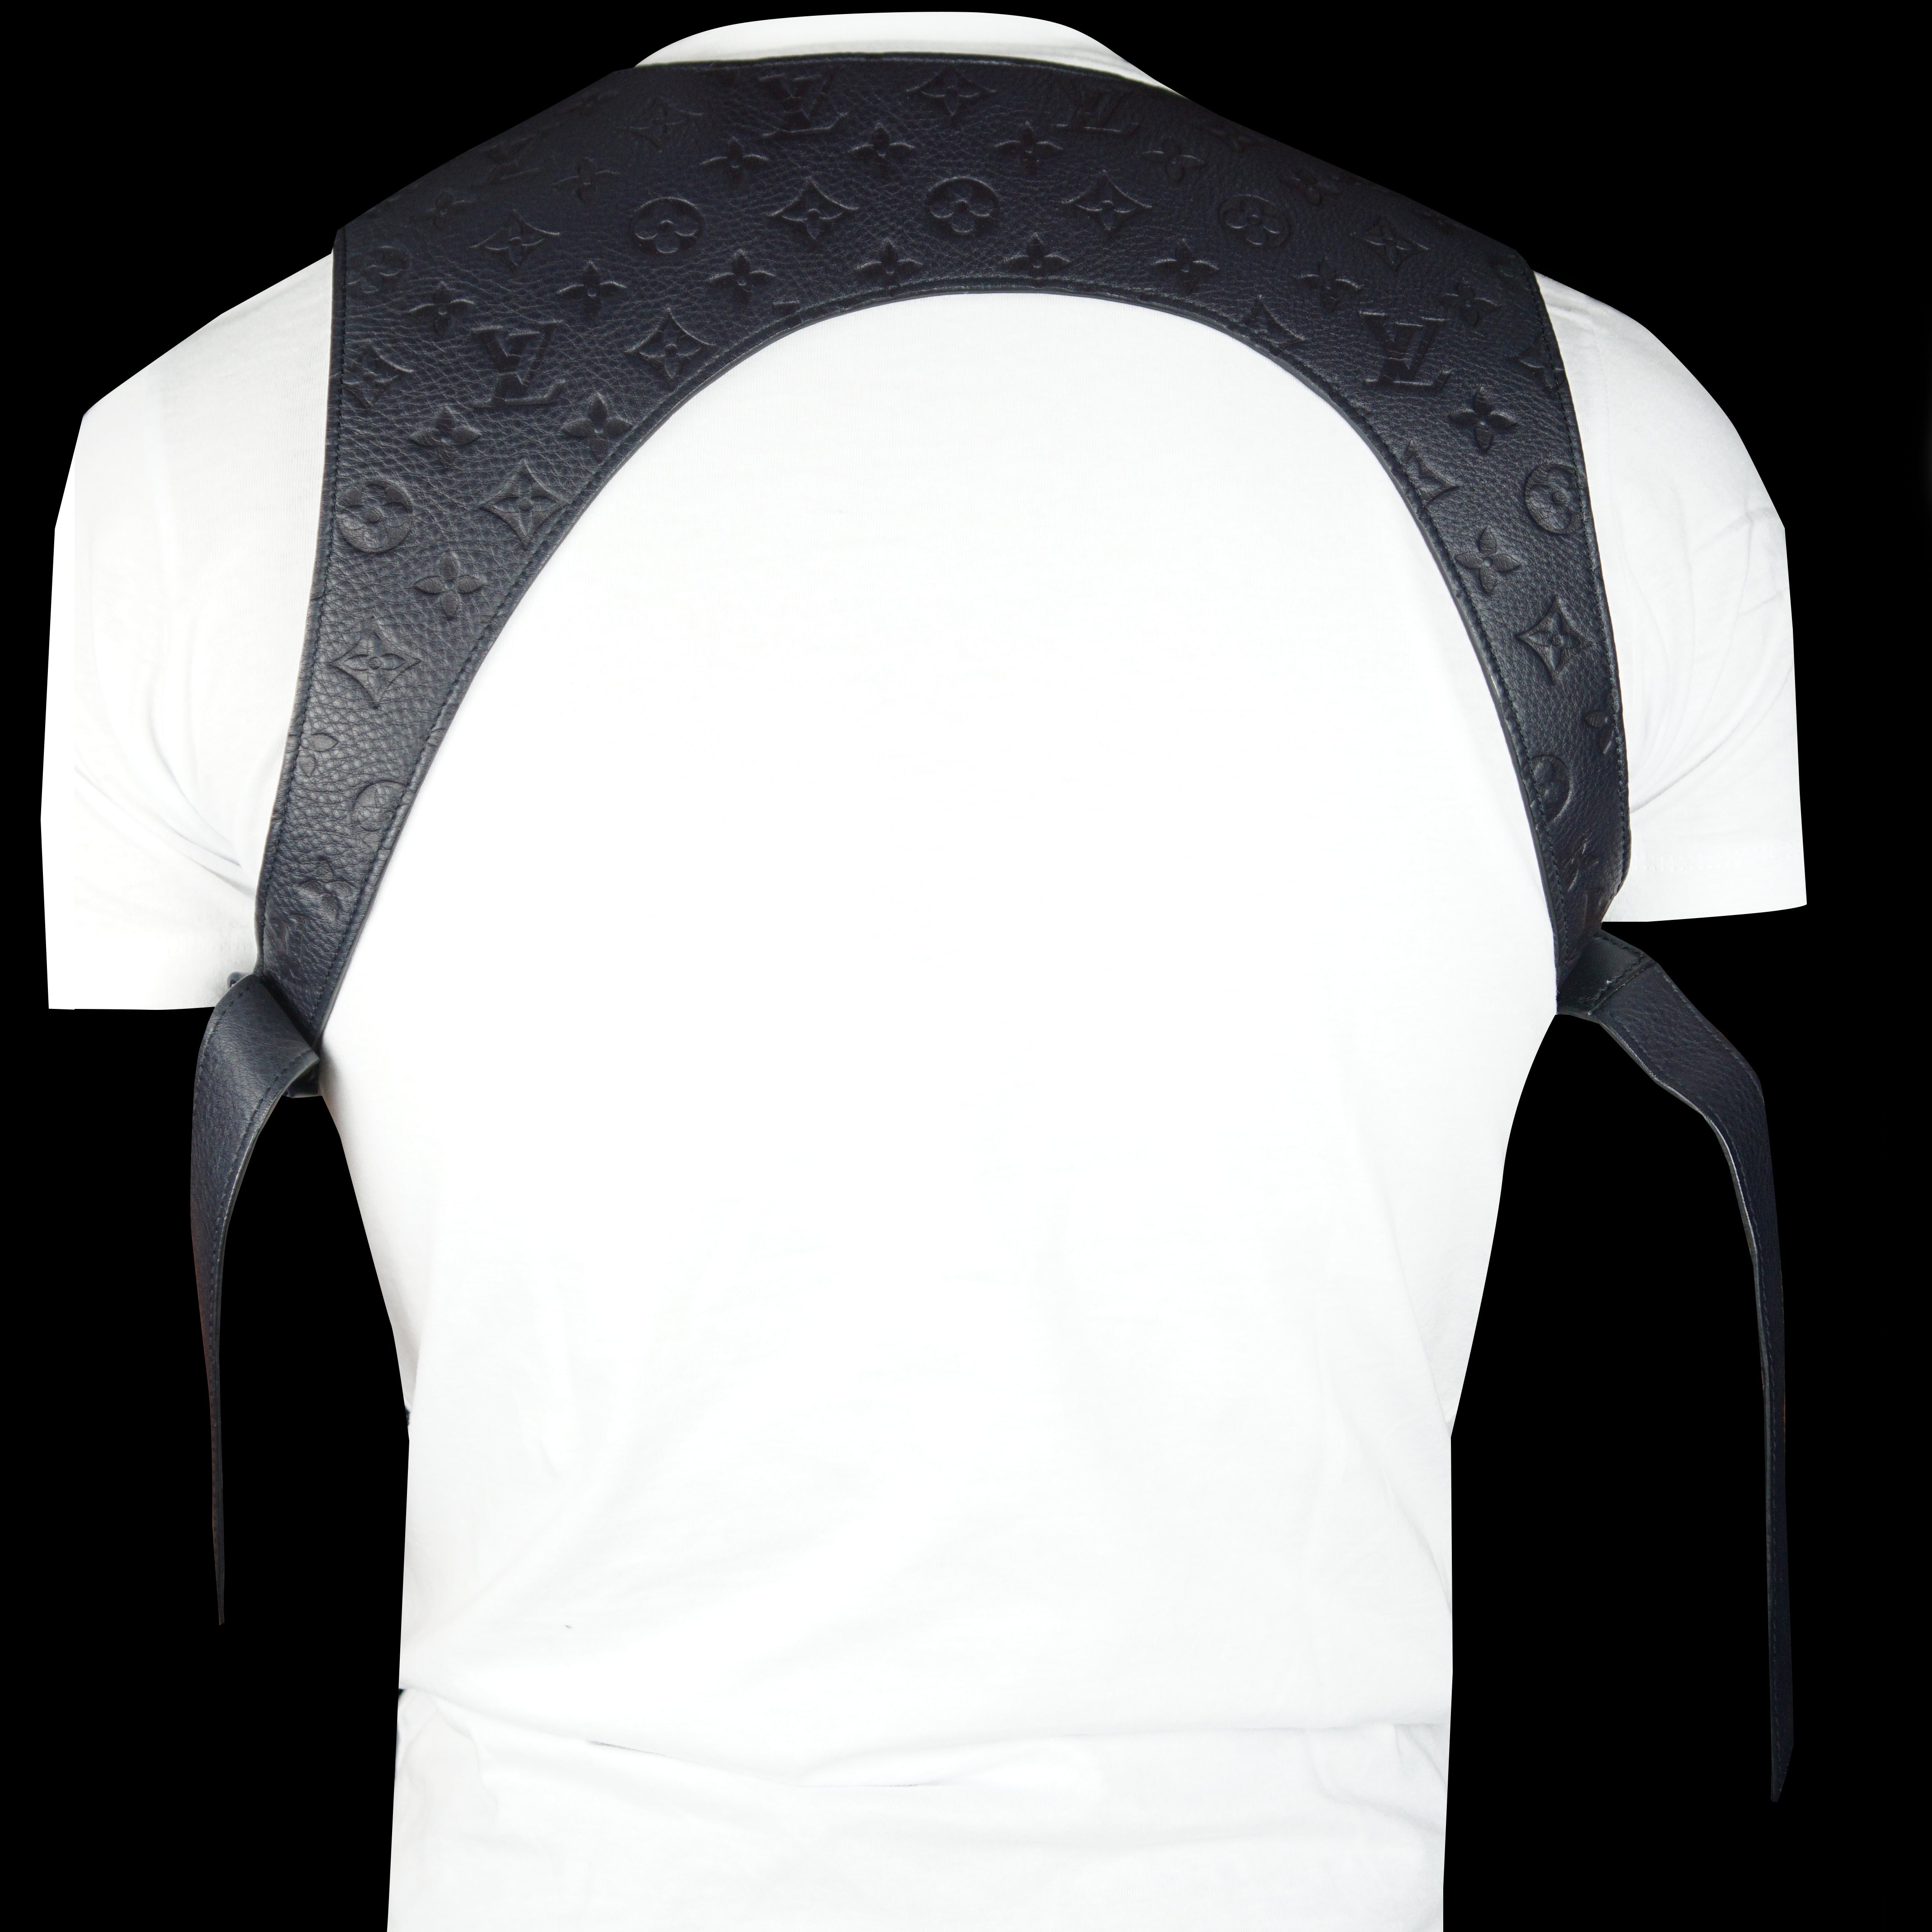 W2C LV cutaway vest / mid layer : r/DesignerReps